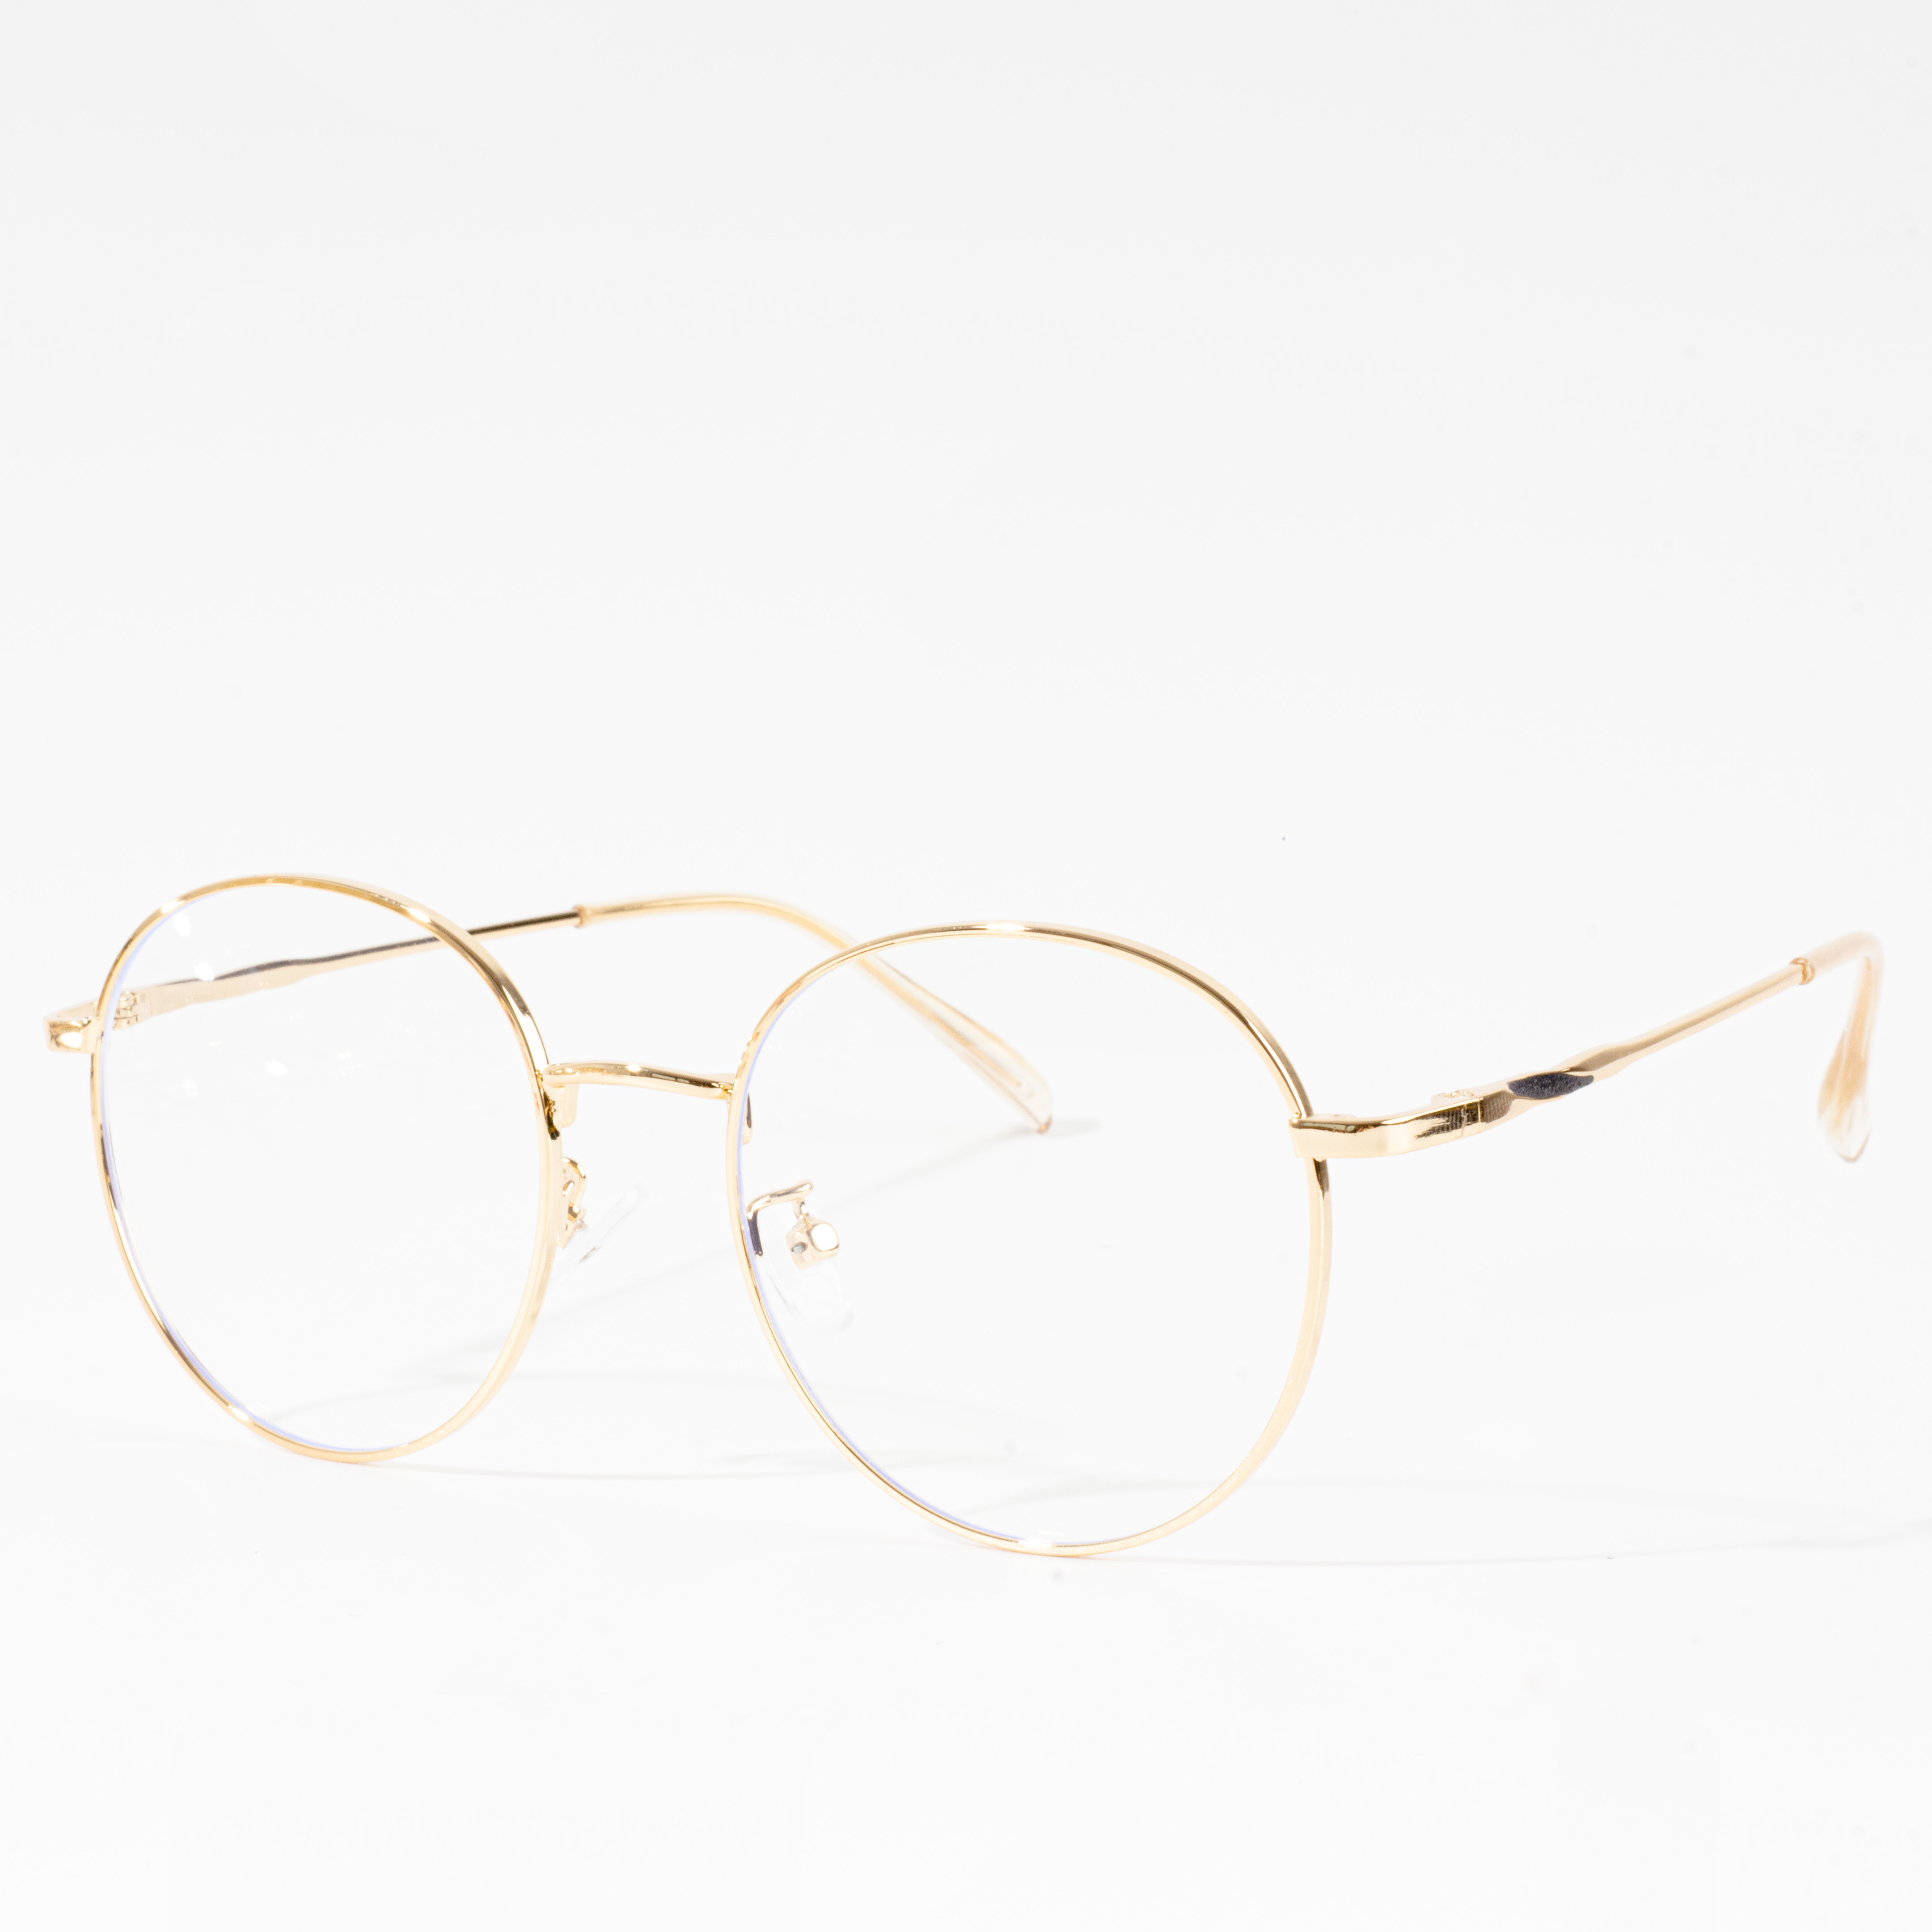 bingkai kacamata modern